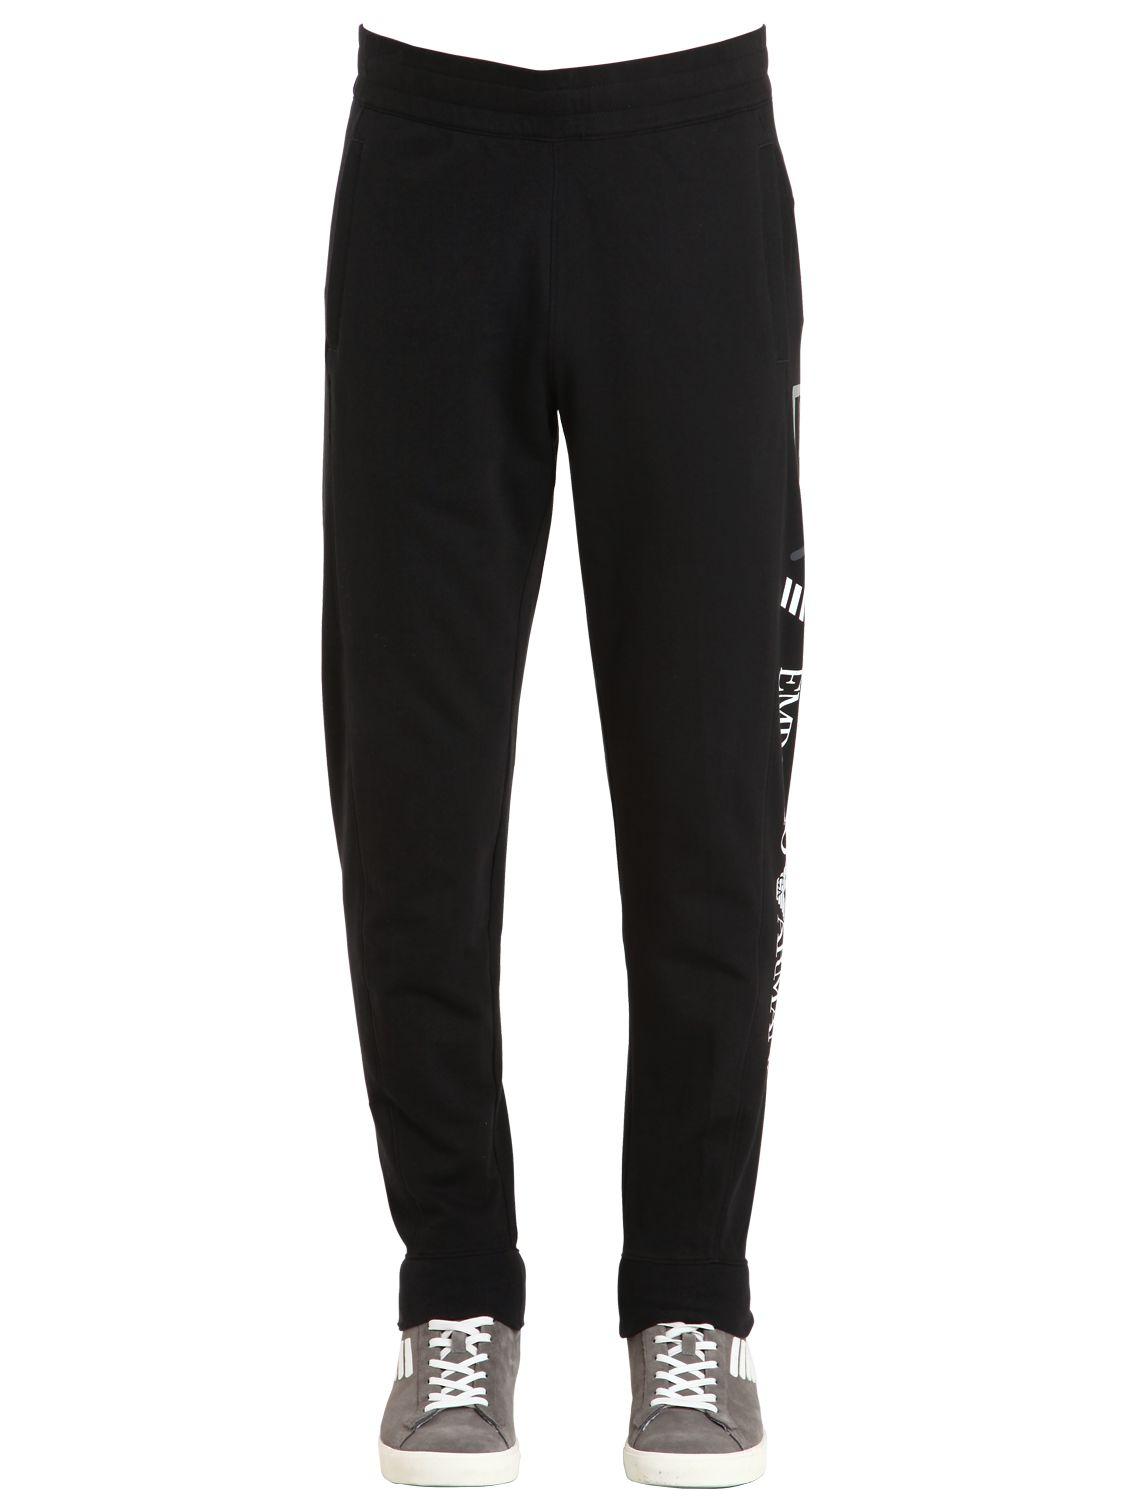 EA7 Logo Cotton Sweatpants in Black for Men - Lyst